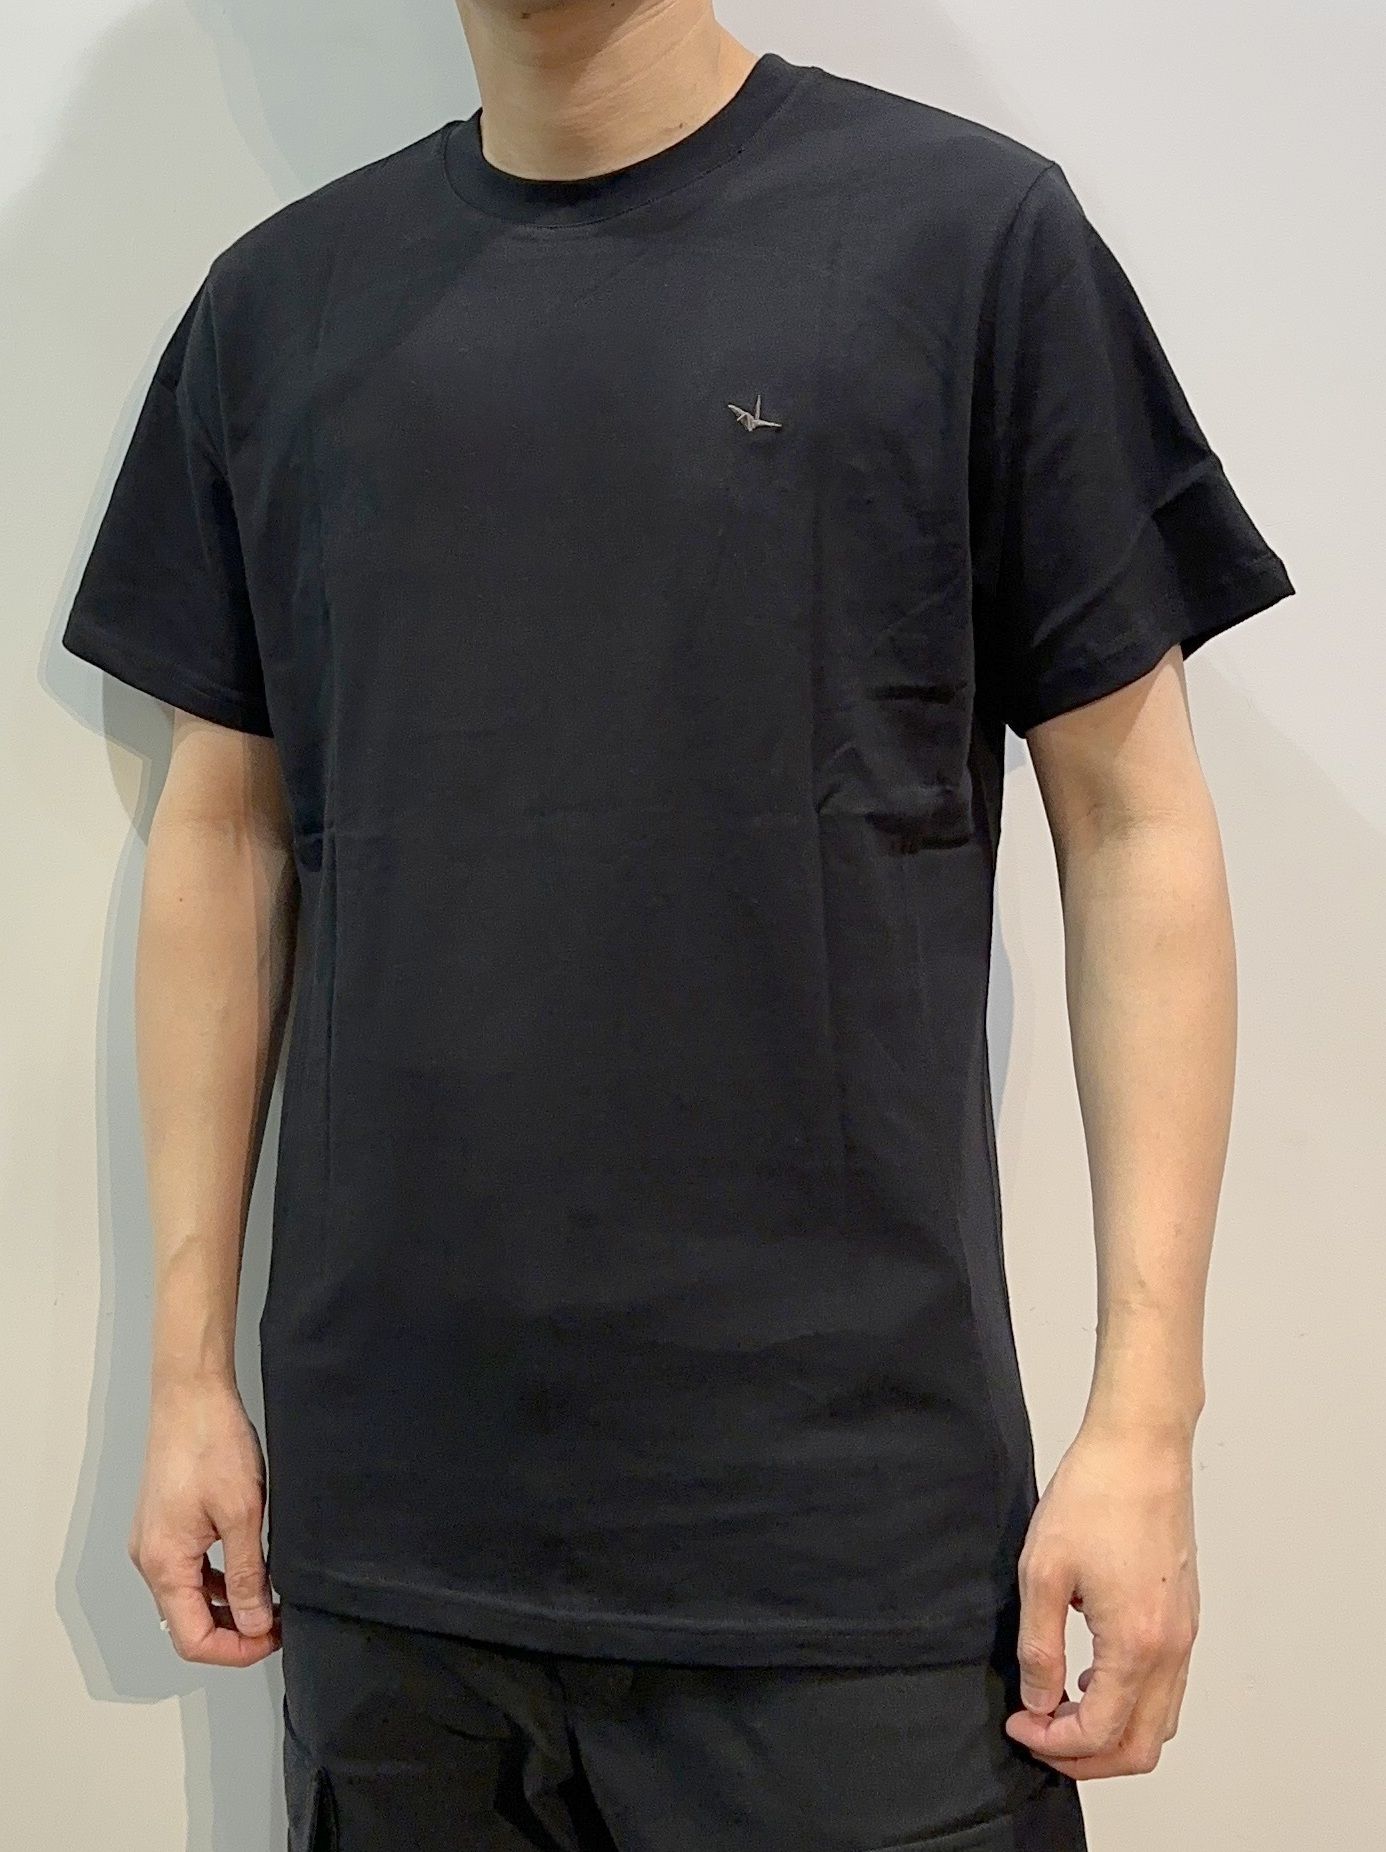 1PIU1UGUALE3 RELAX - コード刺繍バックロゴ半袖Tシャツ / ust-23010